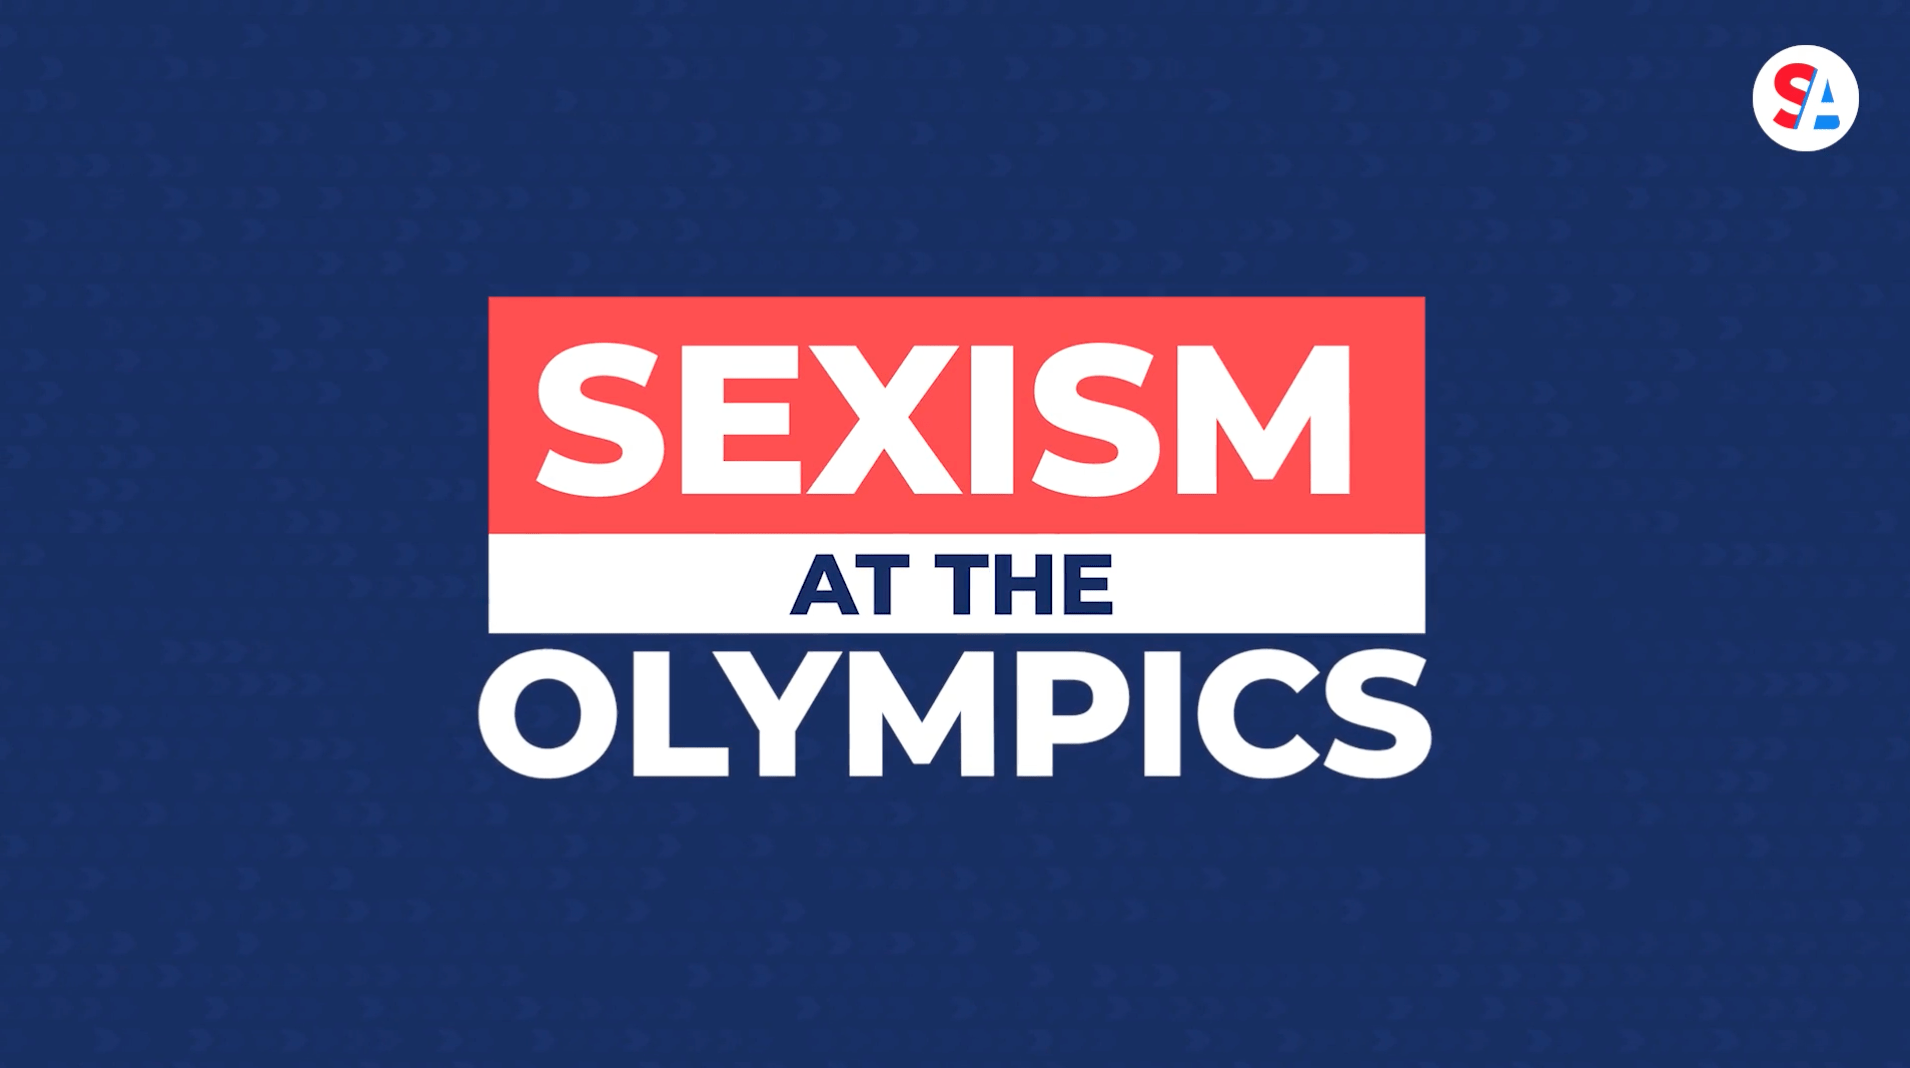 sexism olympics